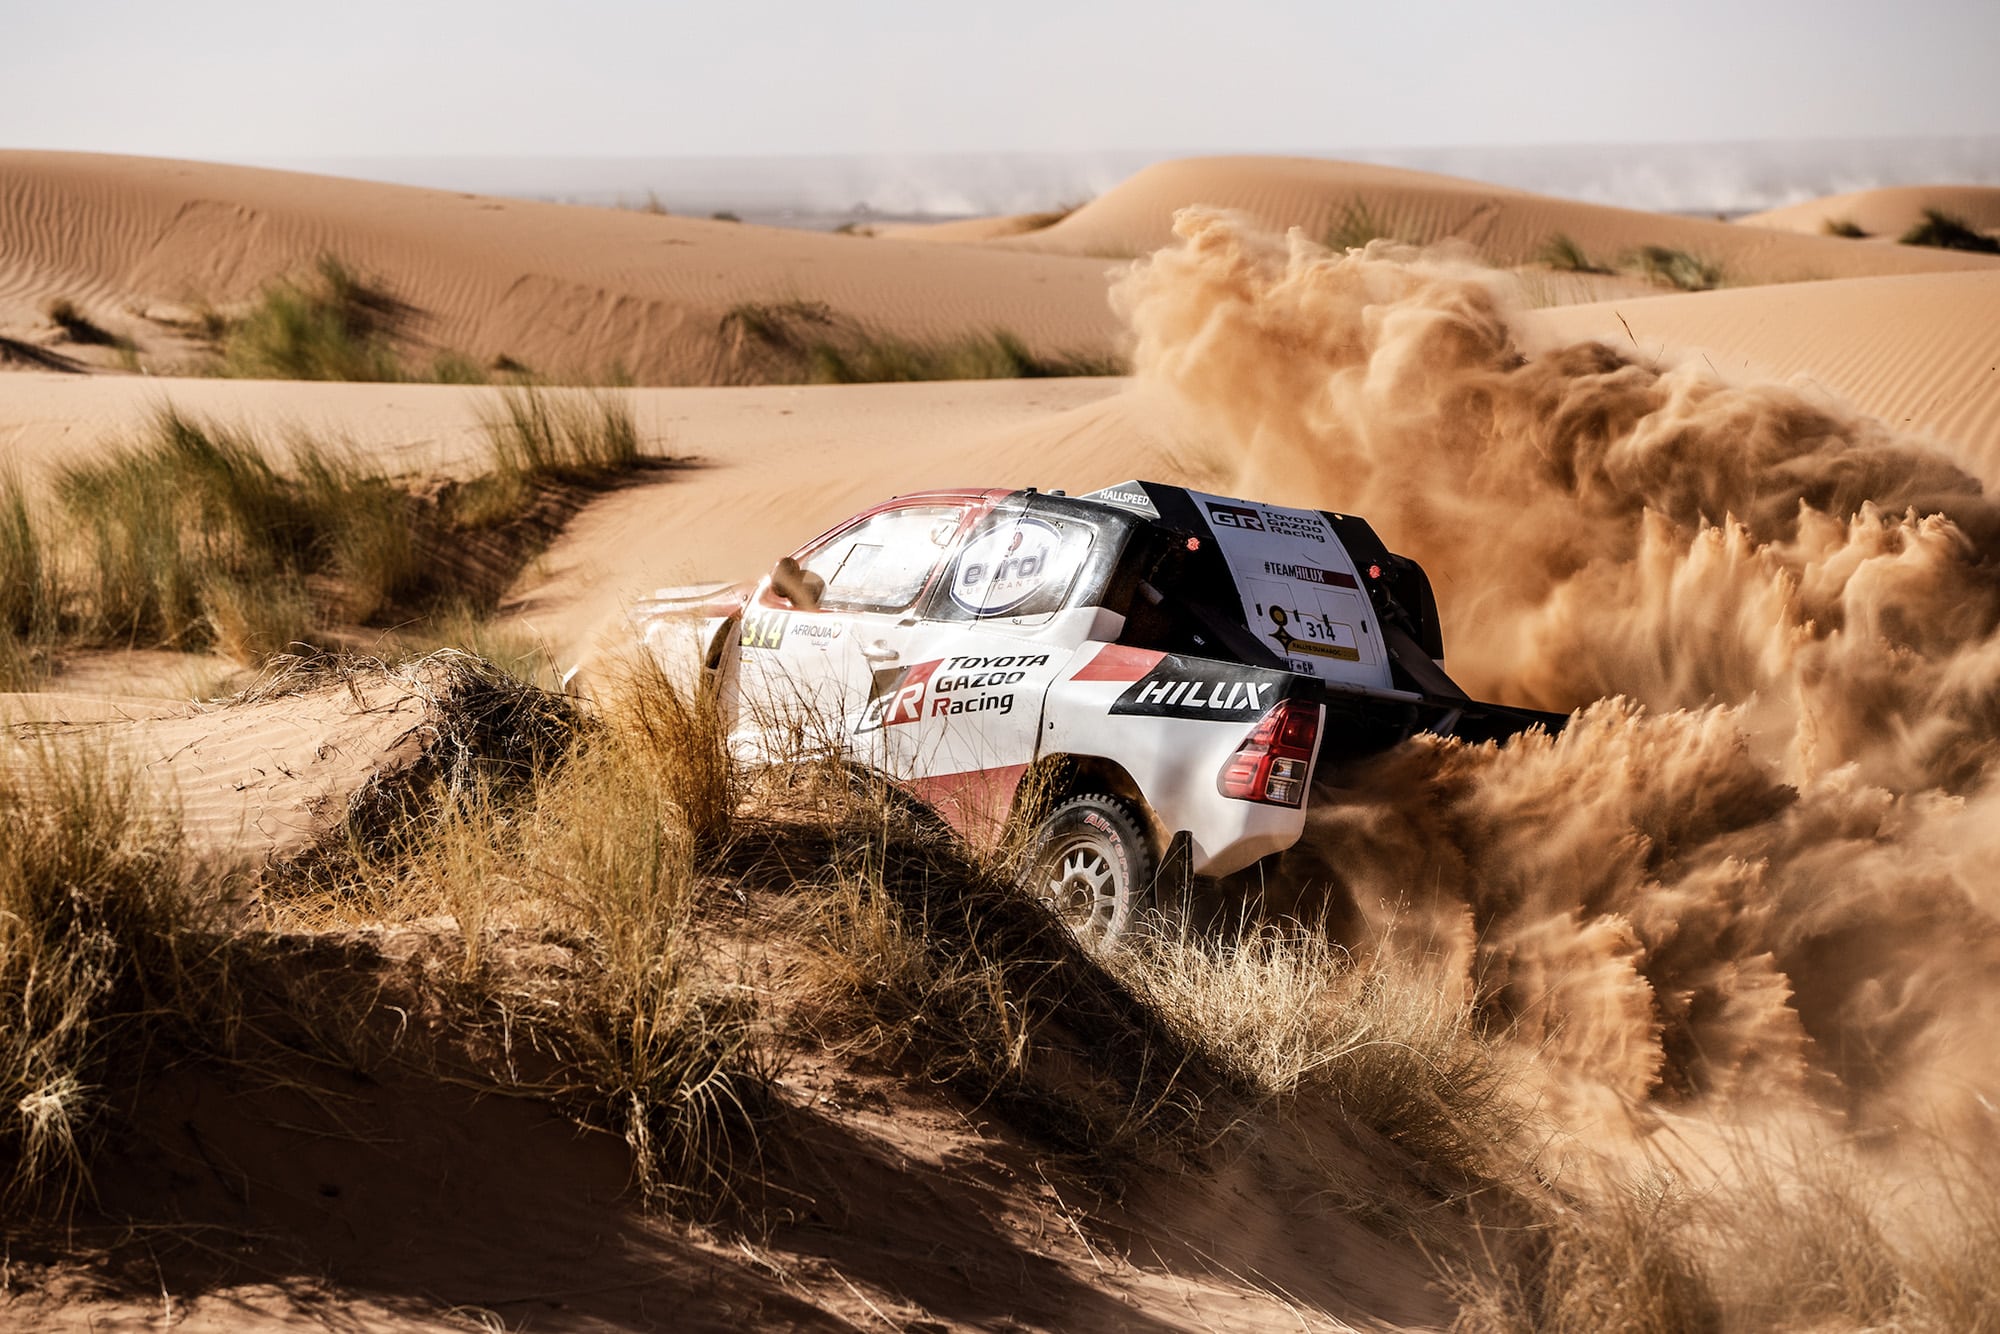 Fernando Alonso's Dakar-specification Toyota Hilux churning up sand during testing